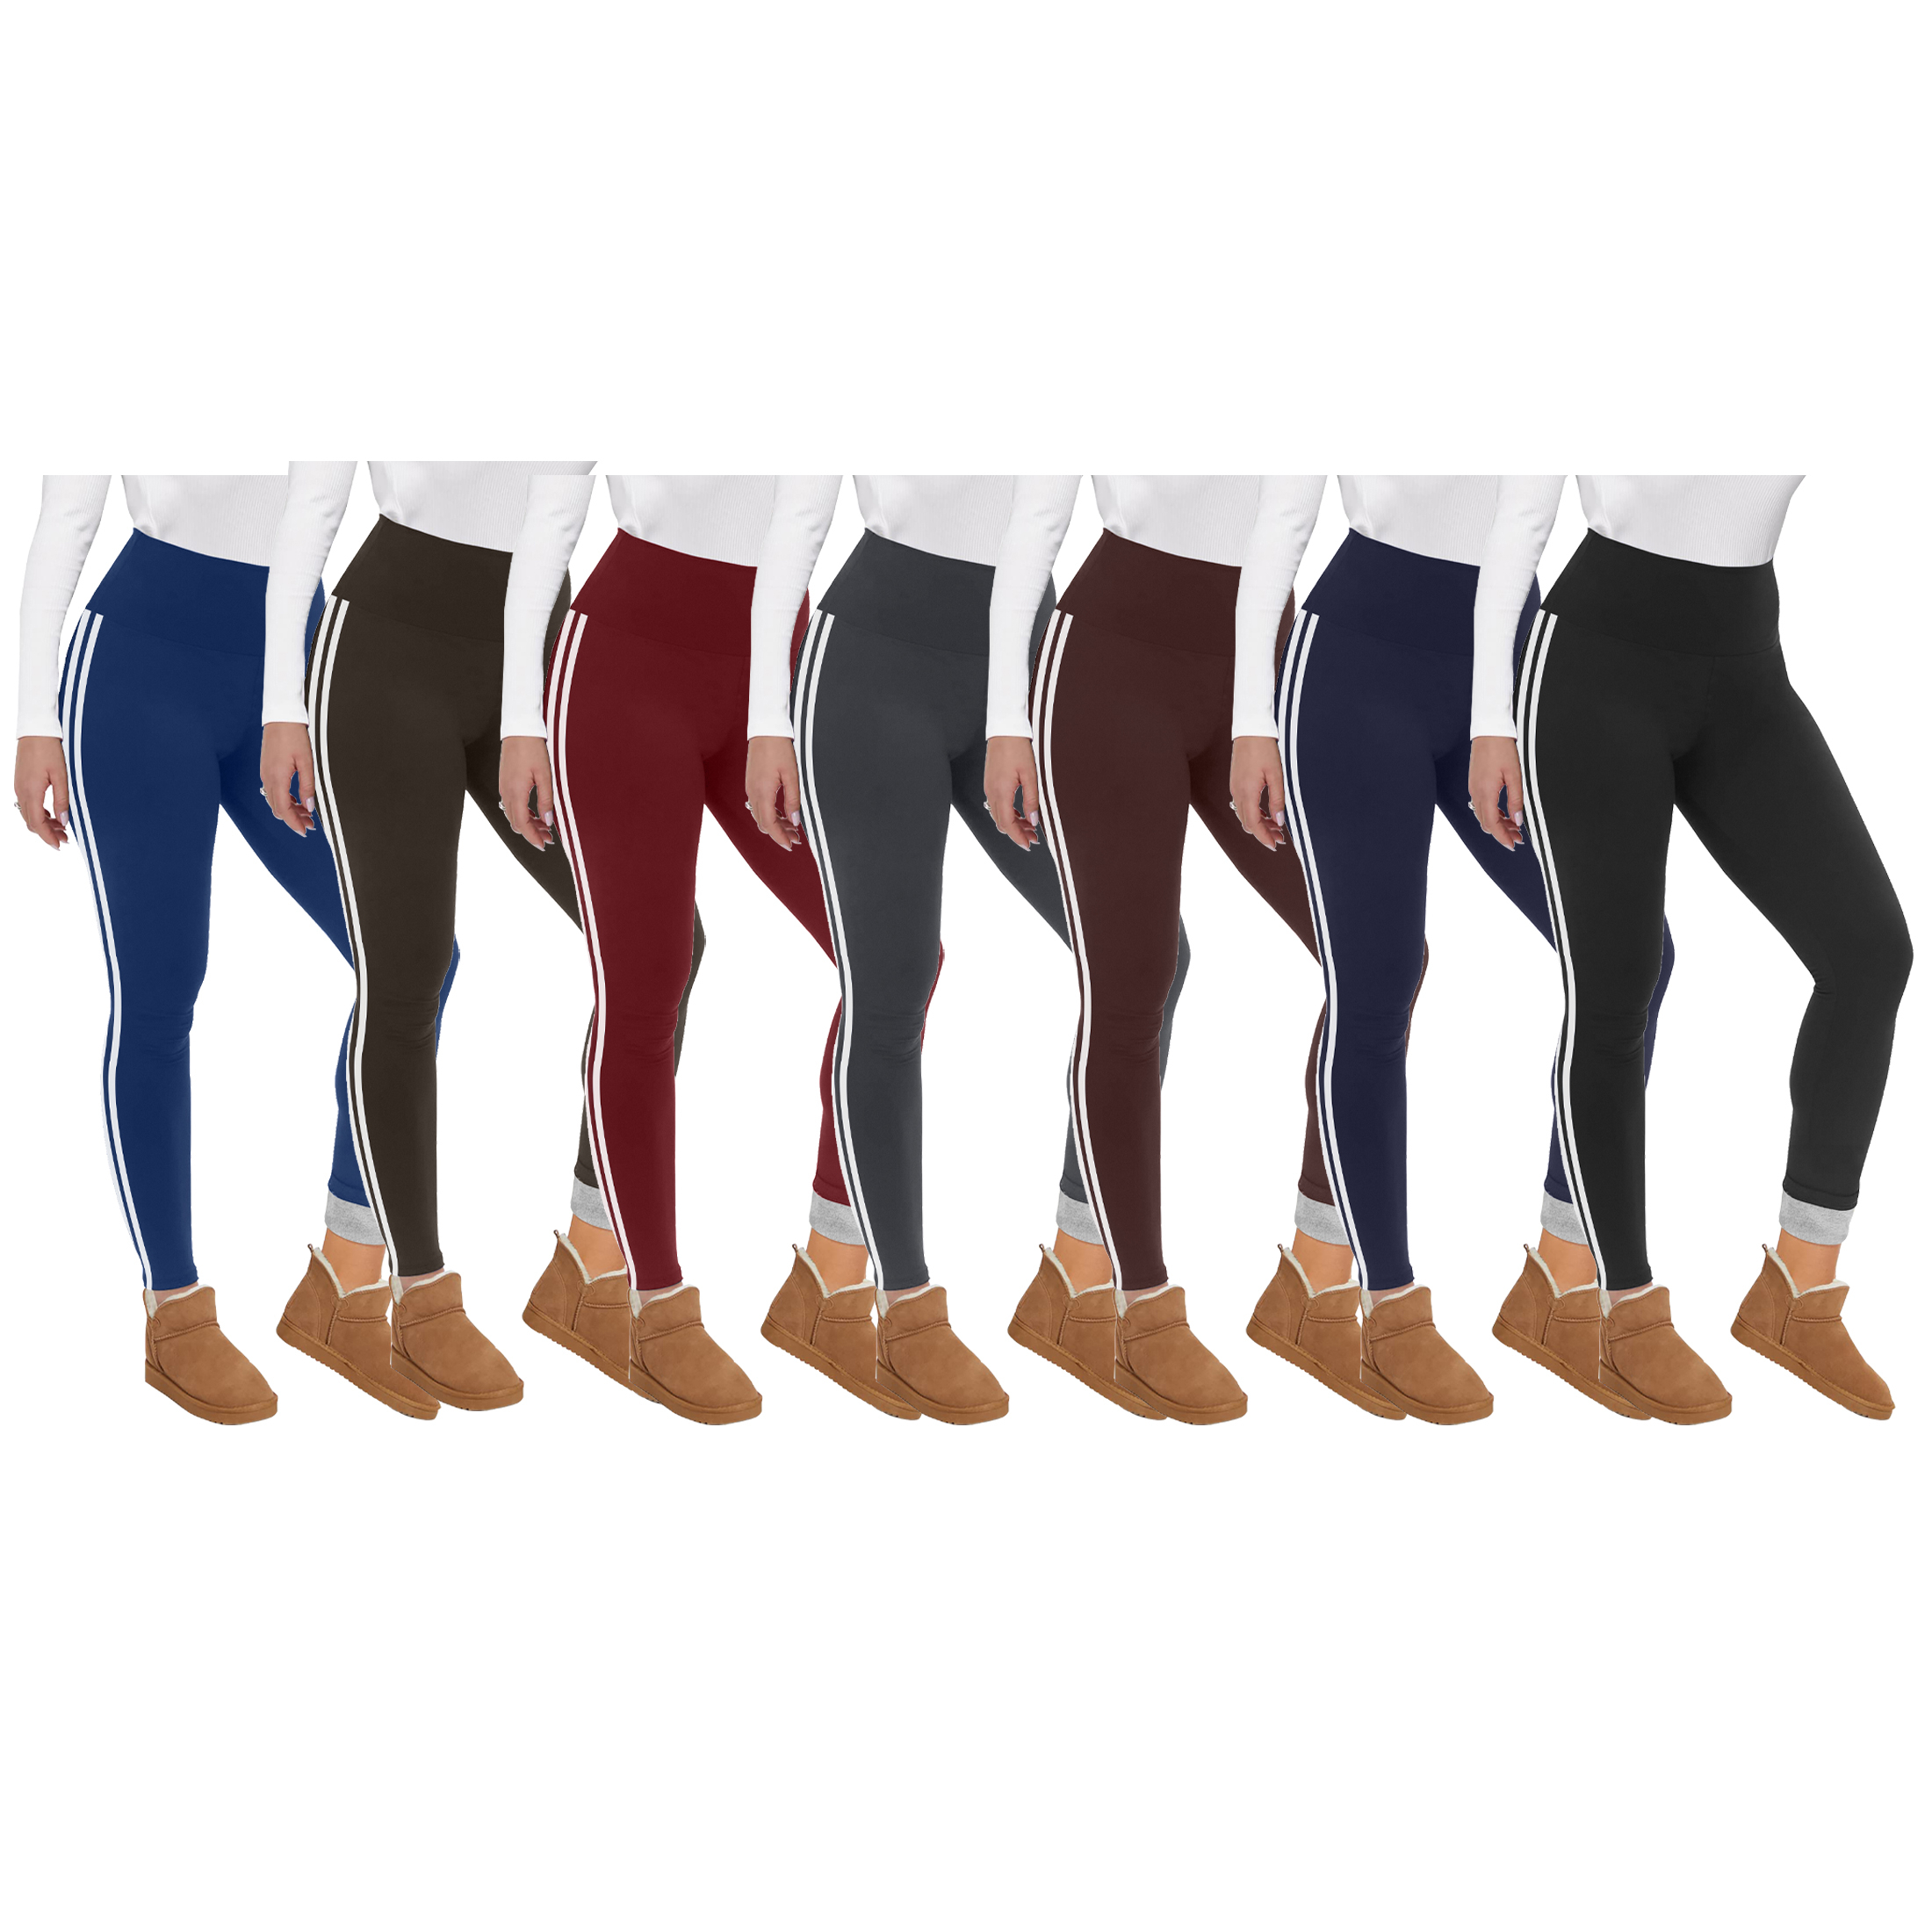 Bargain Hunters 3-Pack: Womens Ultra Soft faux Lined Yoga Pants High Waisted Leggings